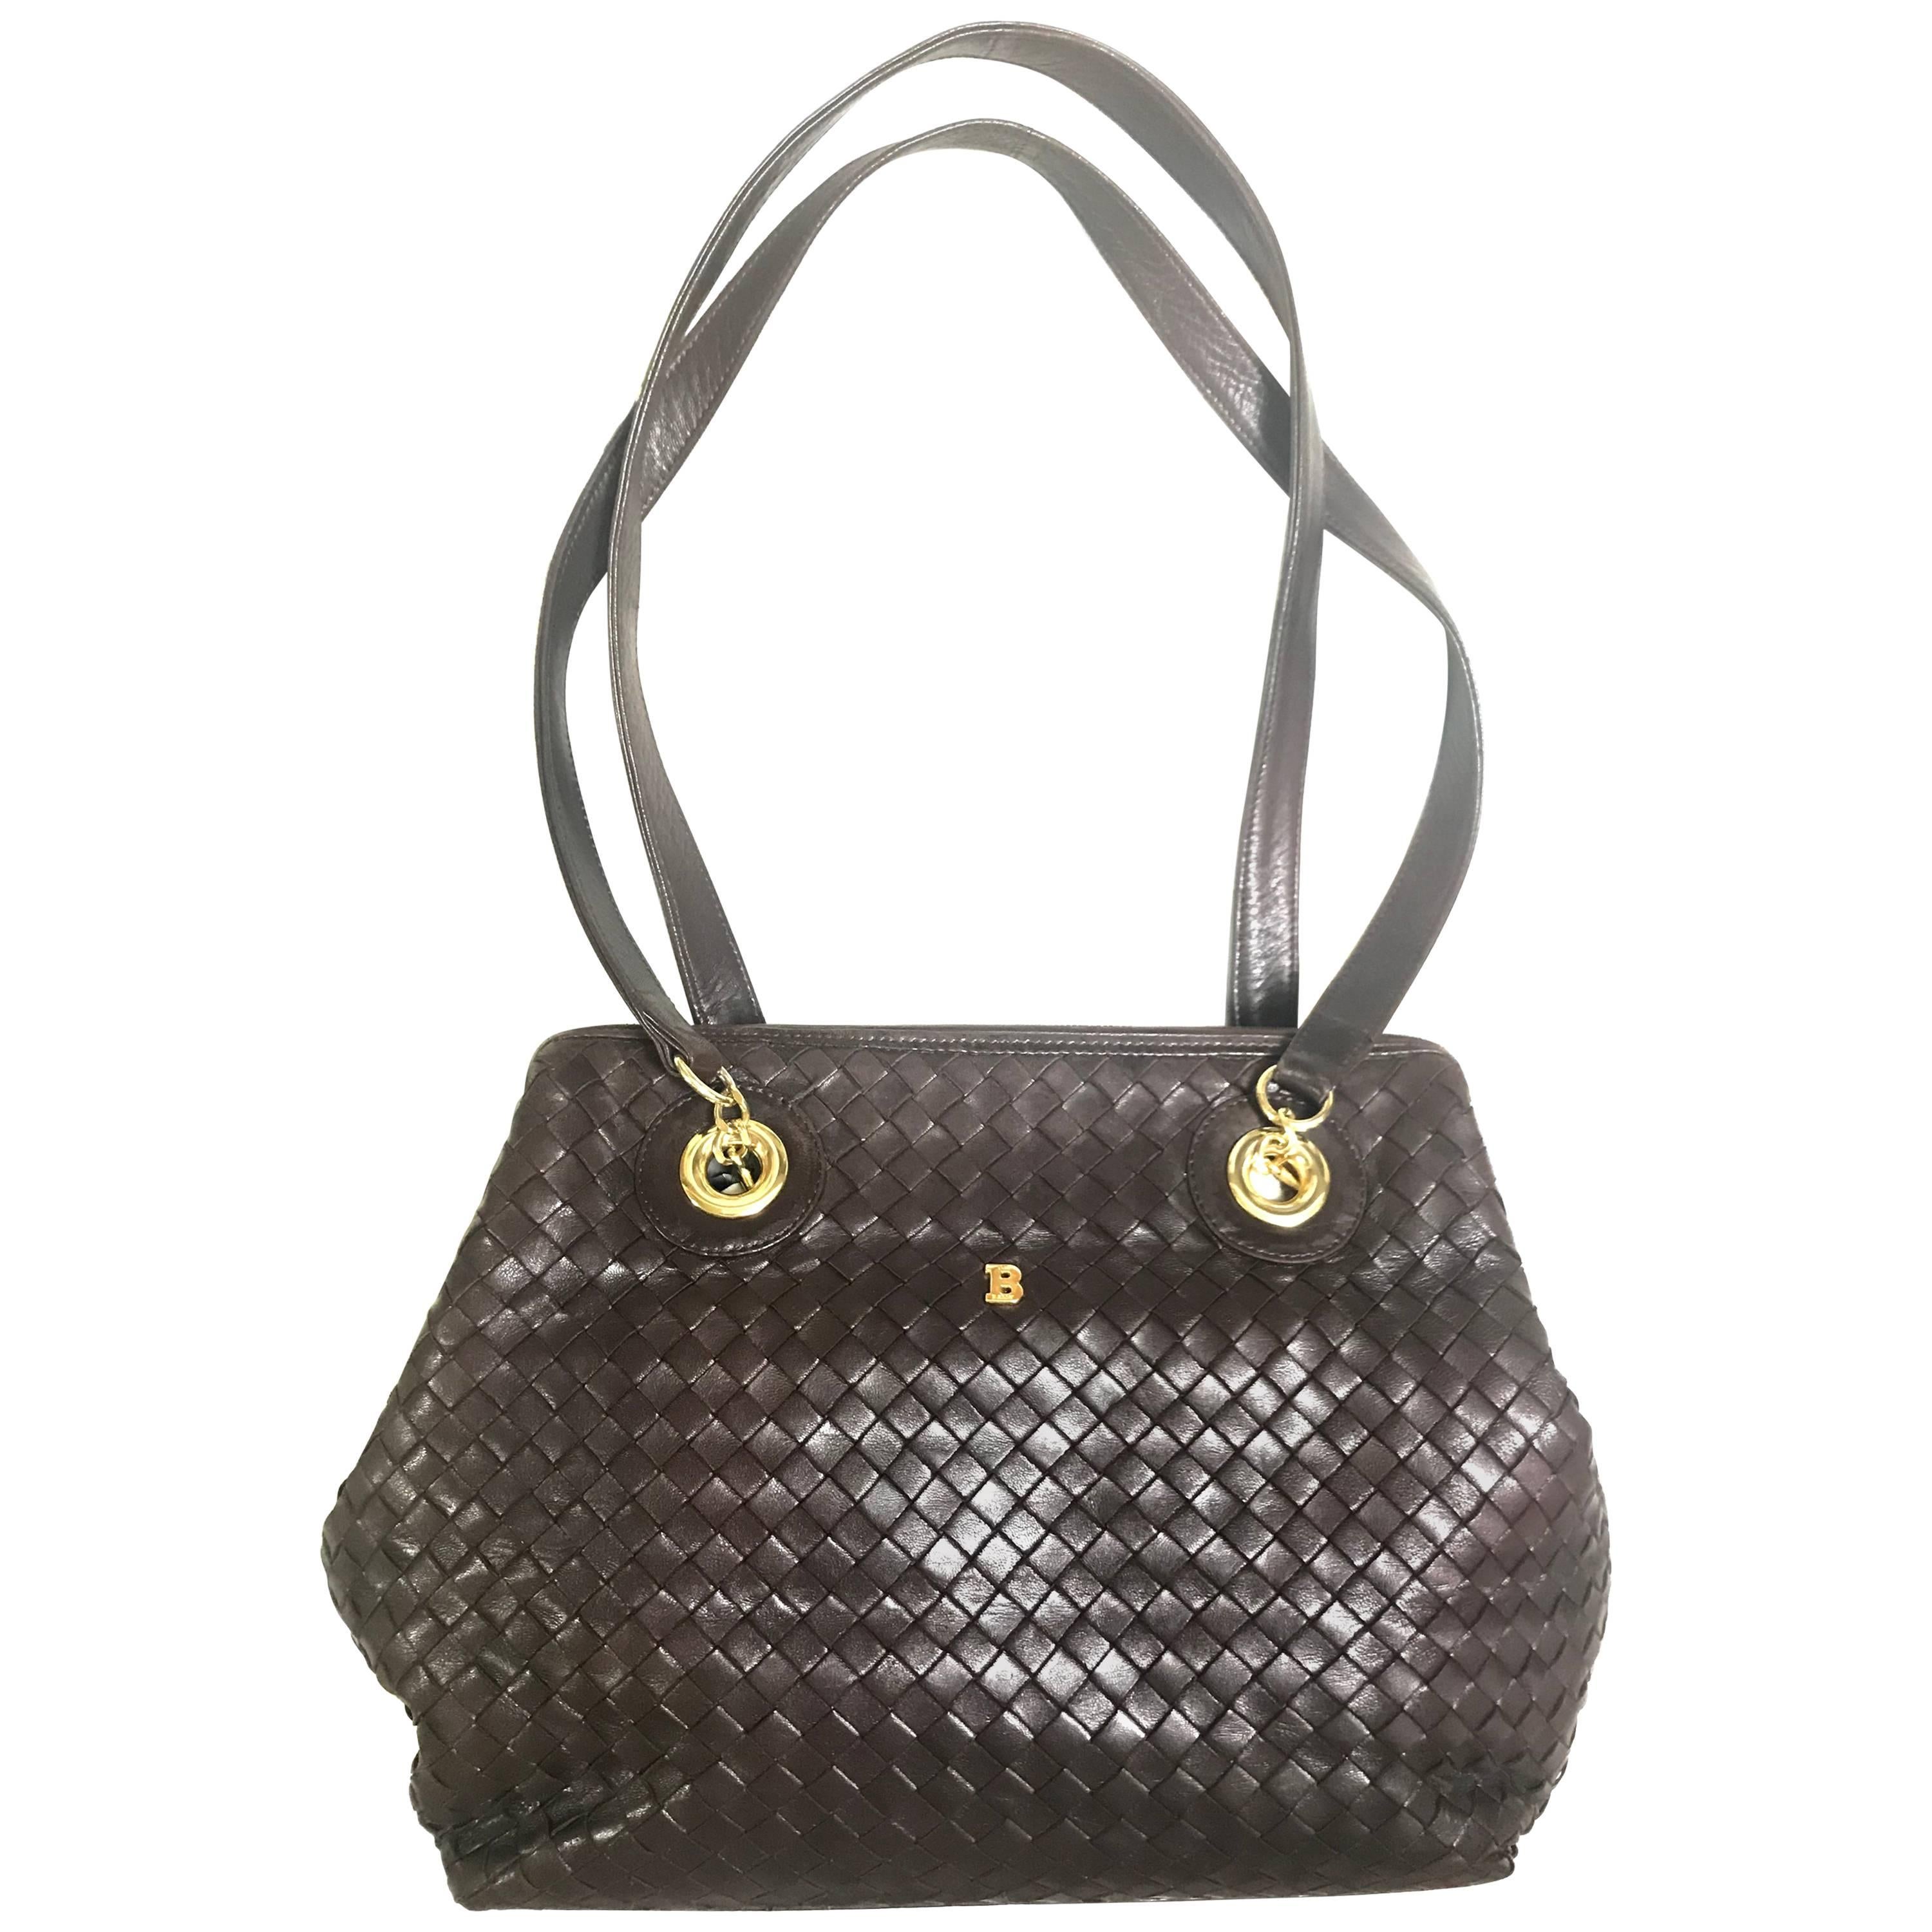 Vintage Bally dark brown lamb leather woven, intrecciato style shoulder bag. For Sale